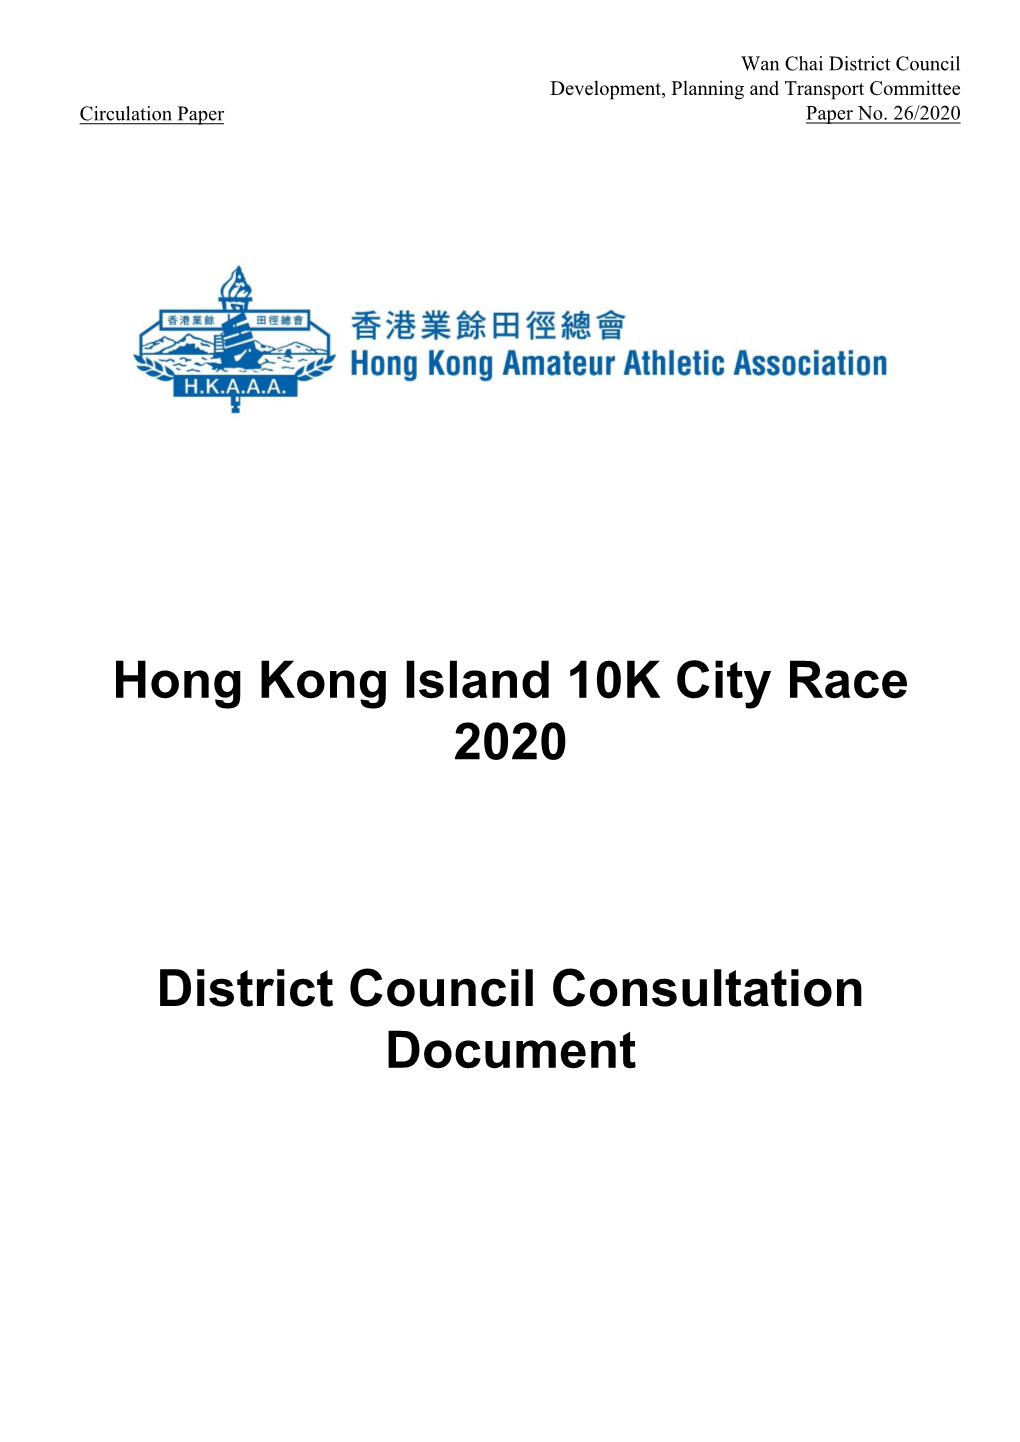 Hong Kong Island 10K City Race 2020 District Council Consultation